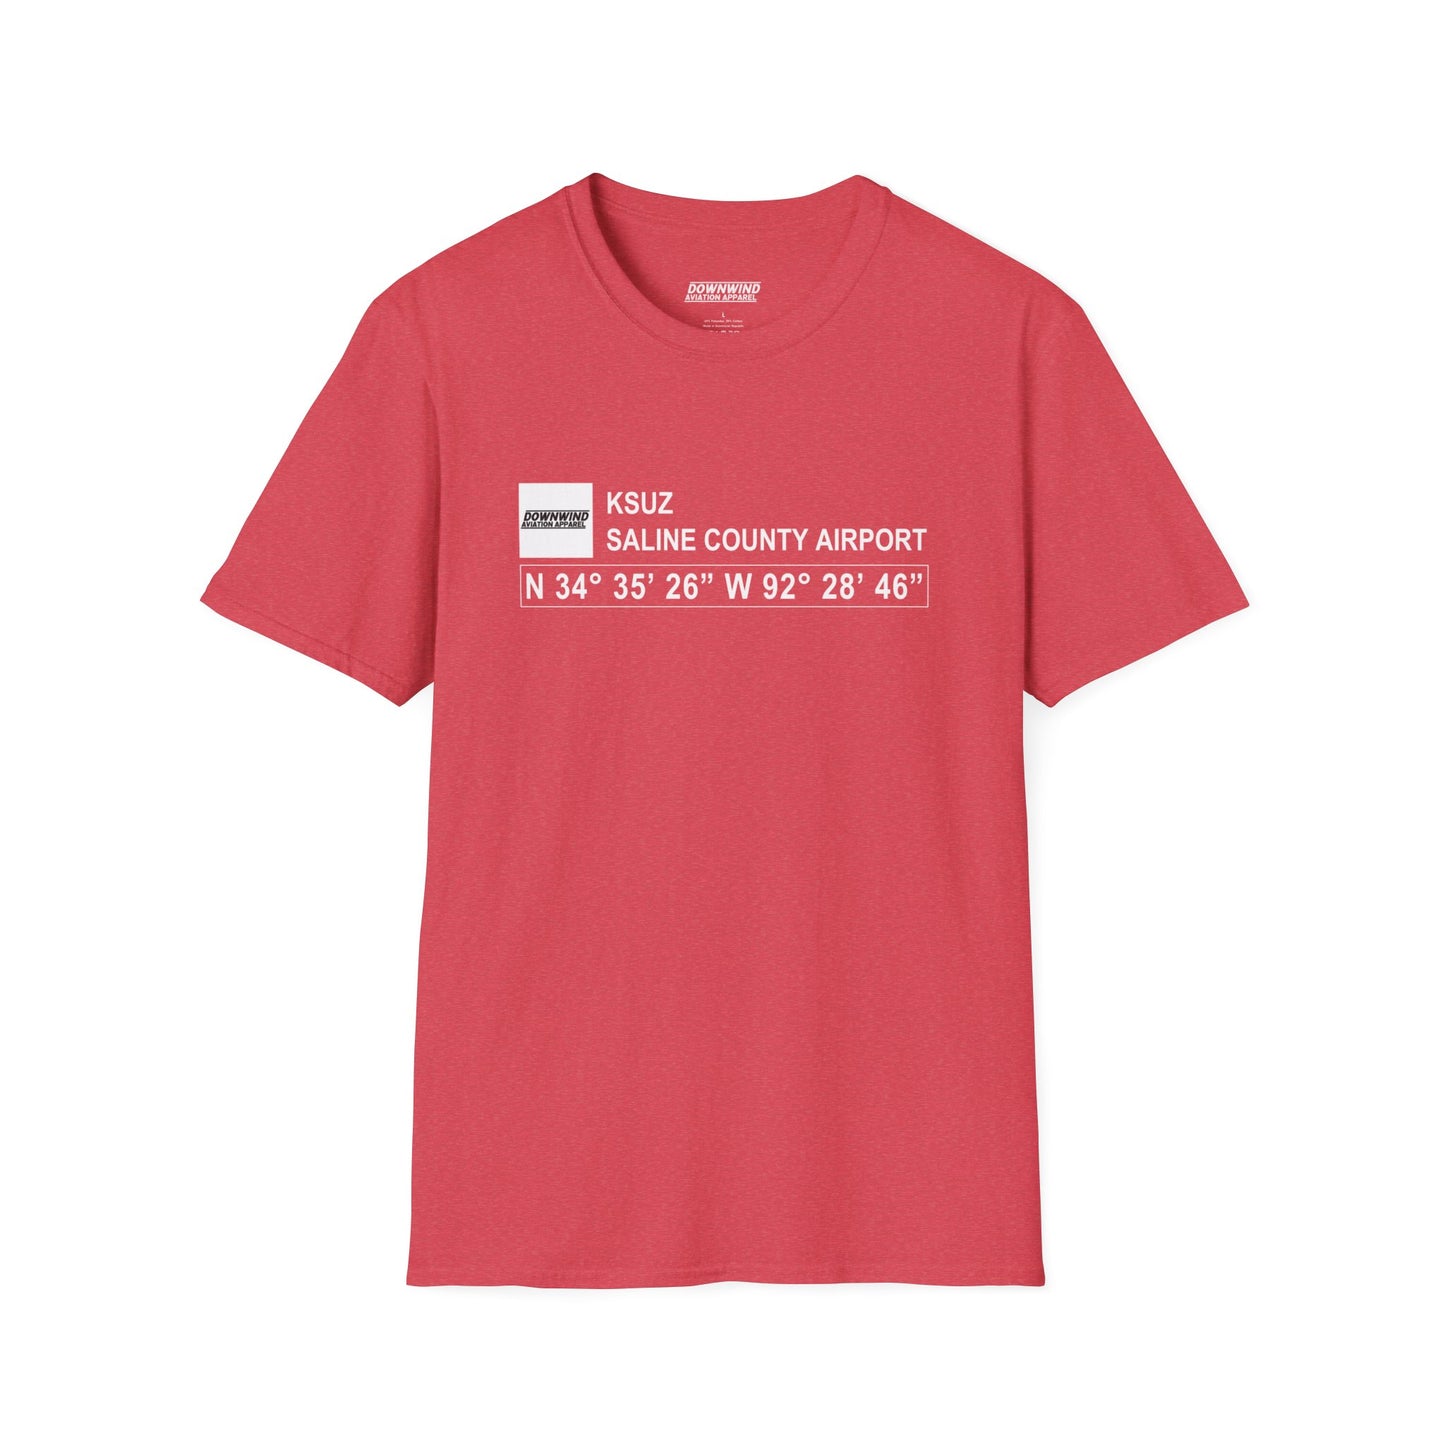 KSUZ / Saline County Airport T-Shirt